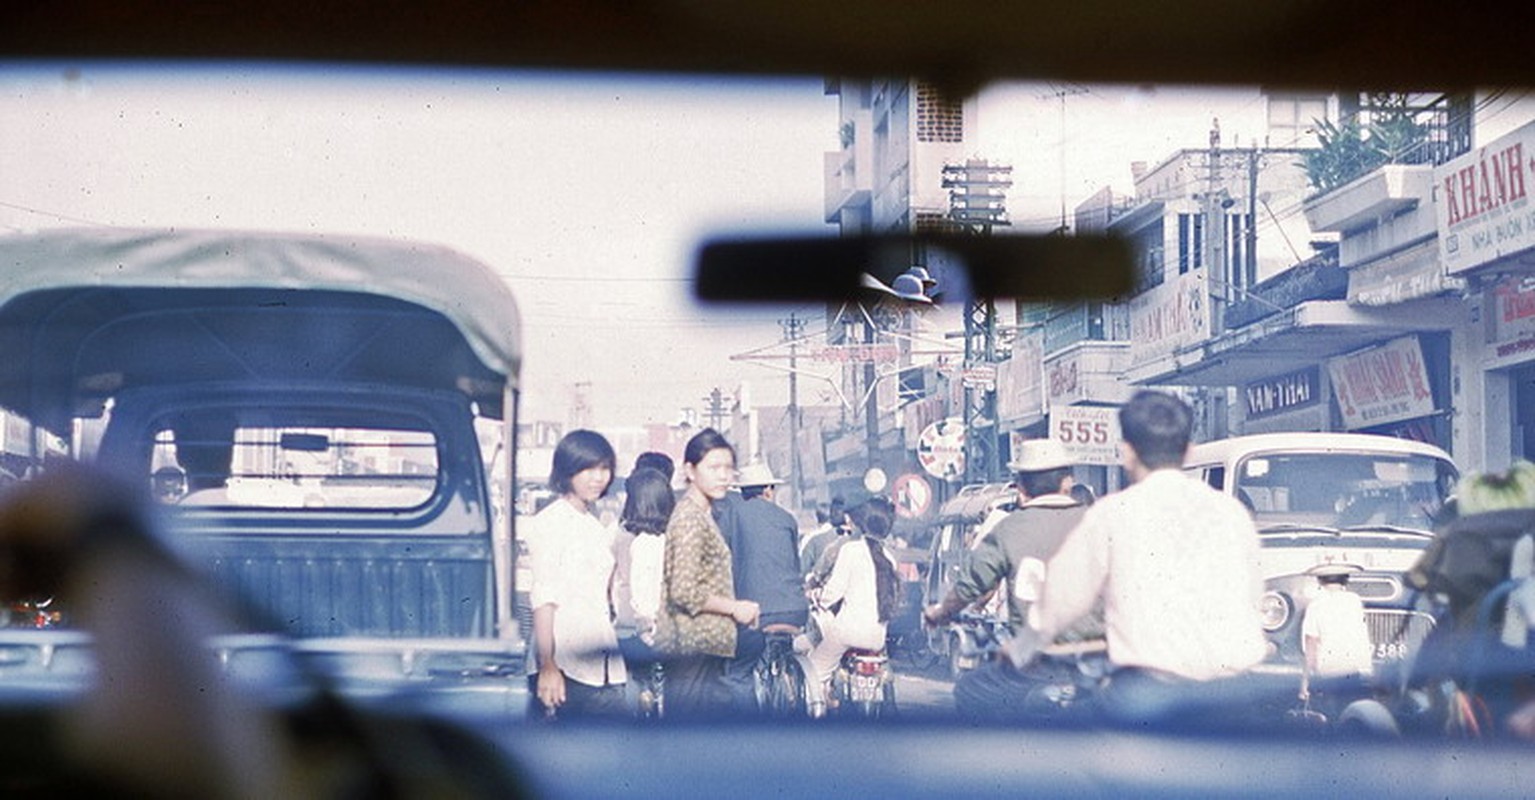 Buc tranh muon mau ve giao thong Sai Gon nam 1969-Hinh-2